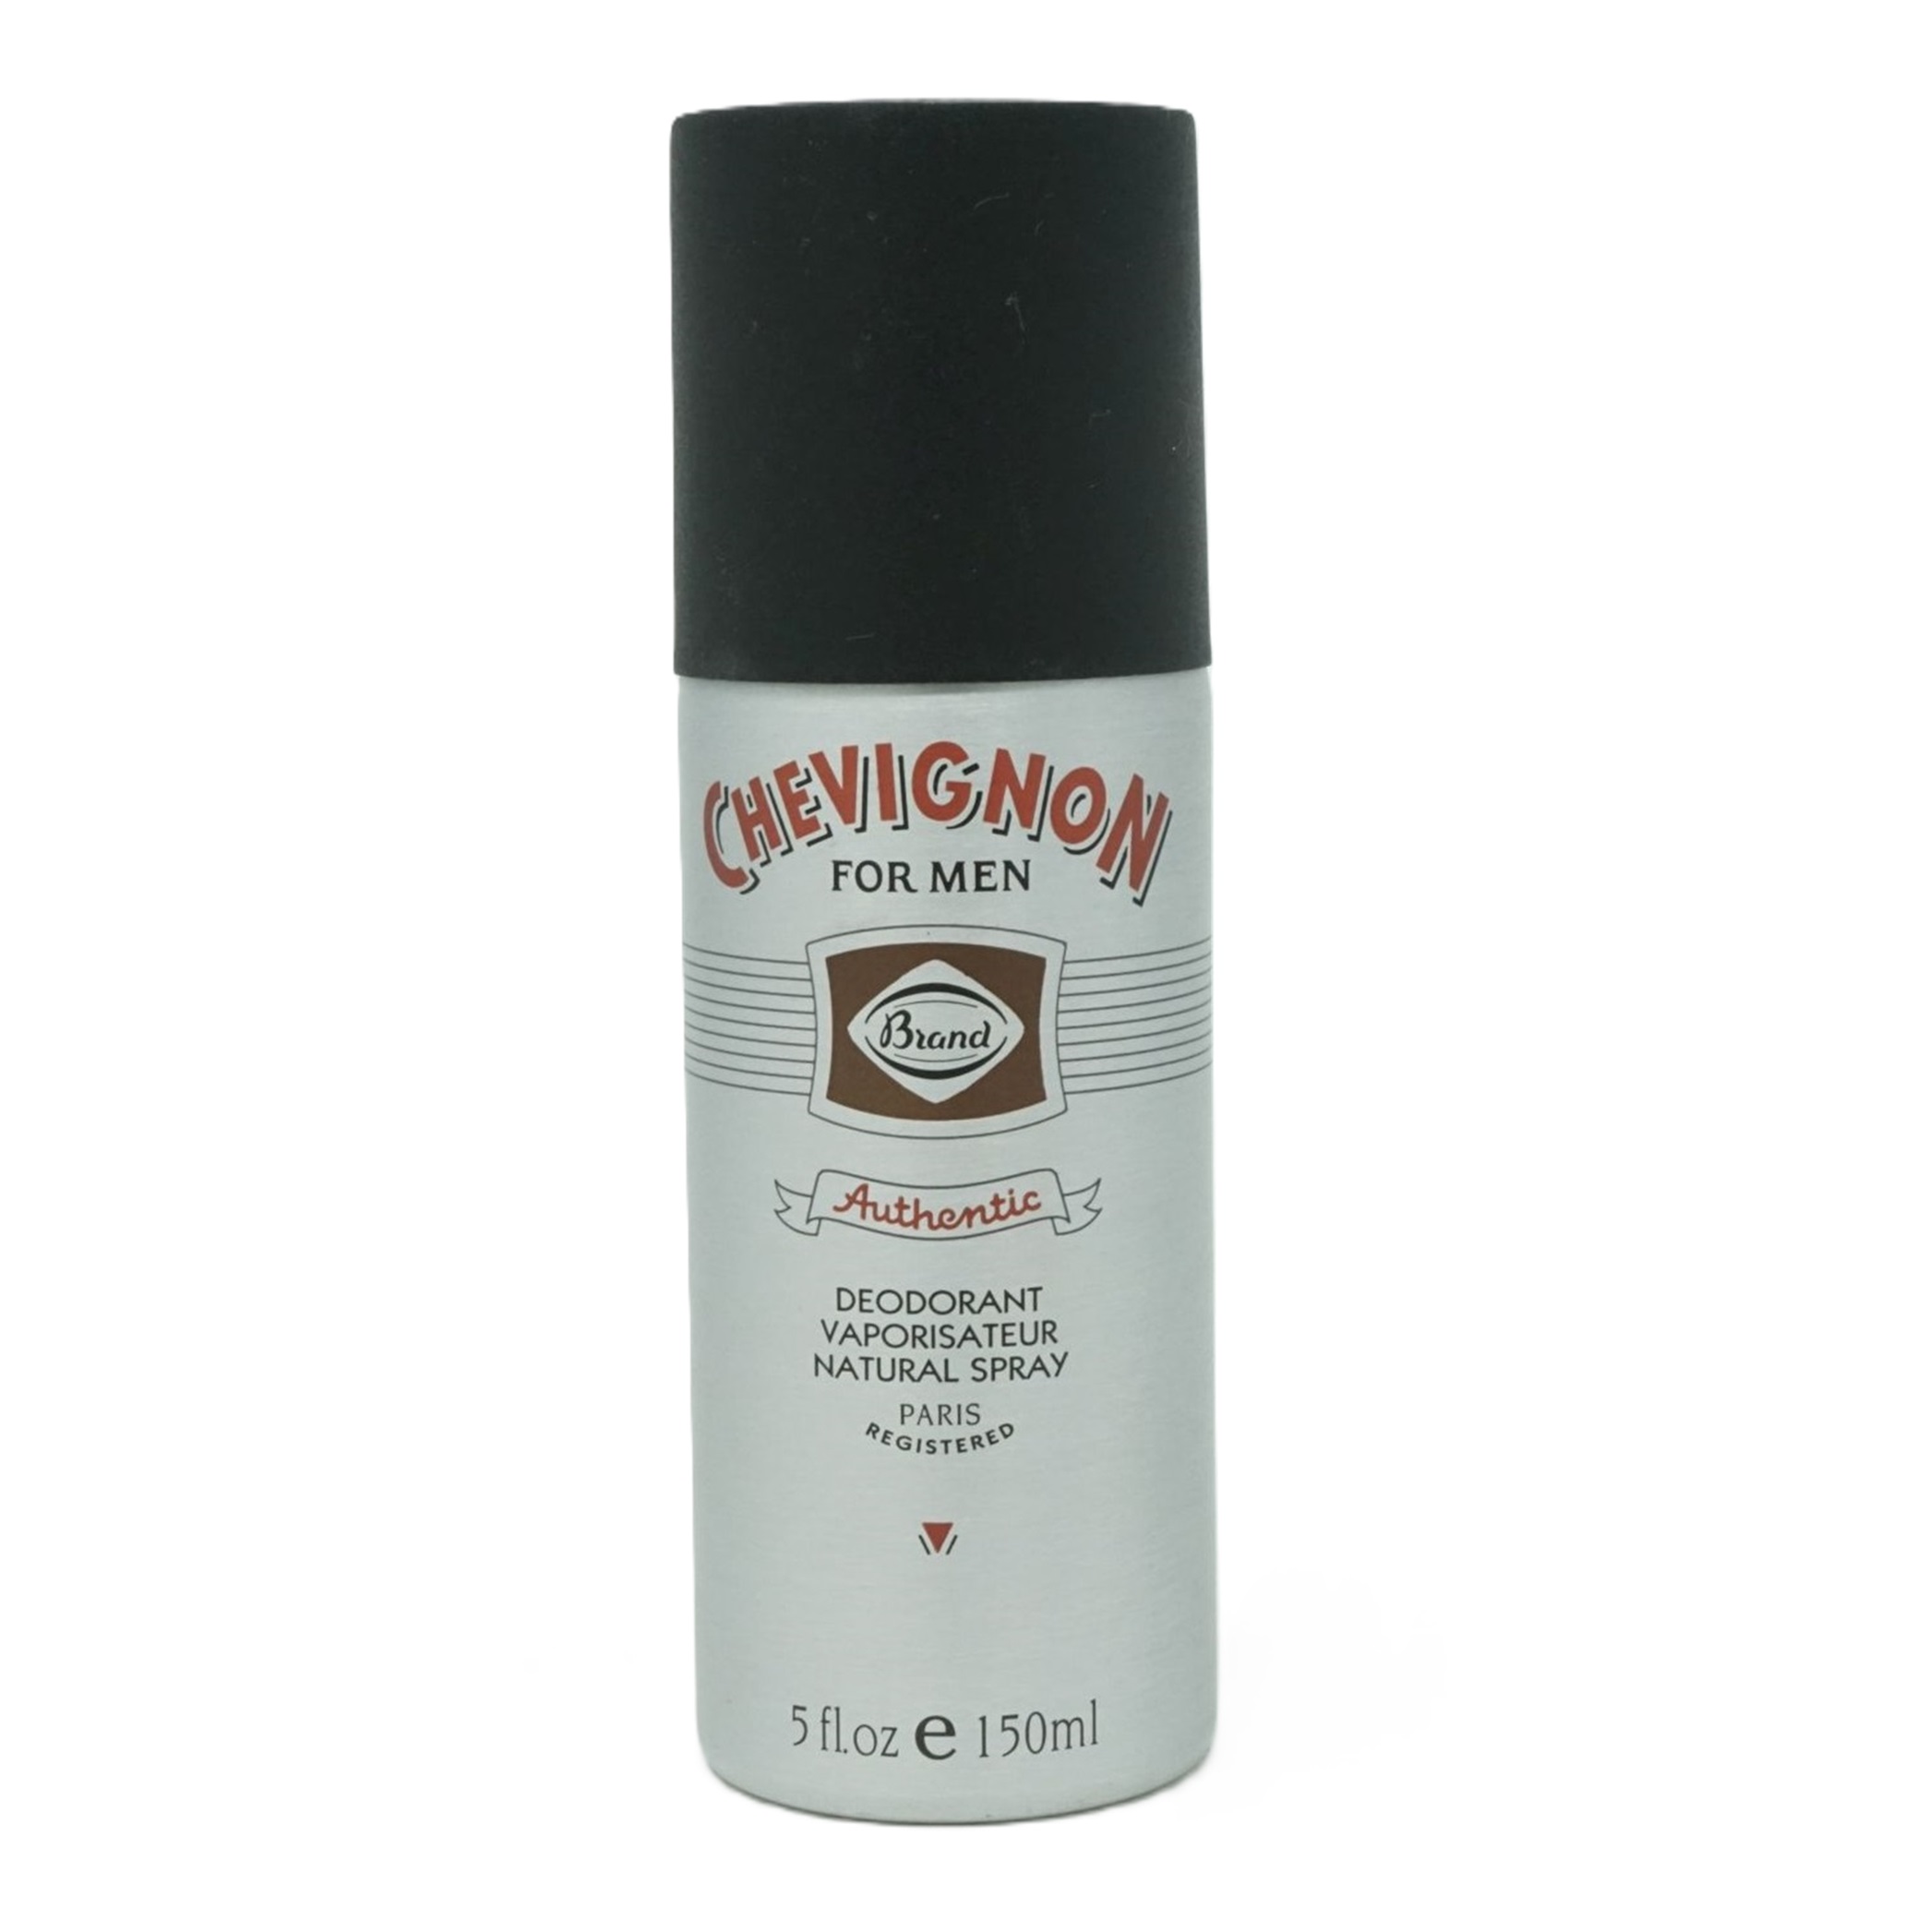 Chevignon Brand for men Deodorant spray 150ml